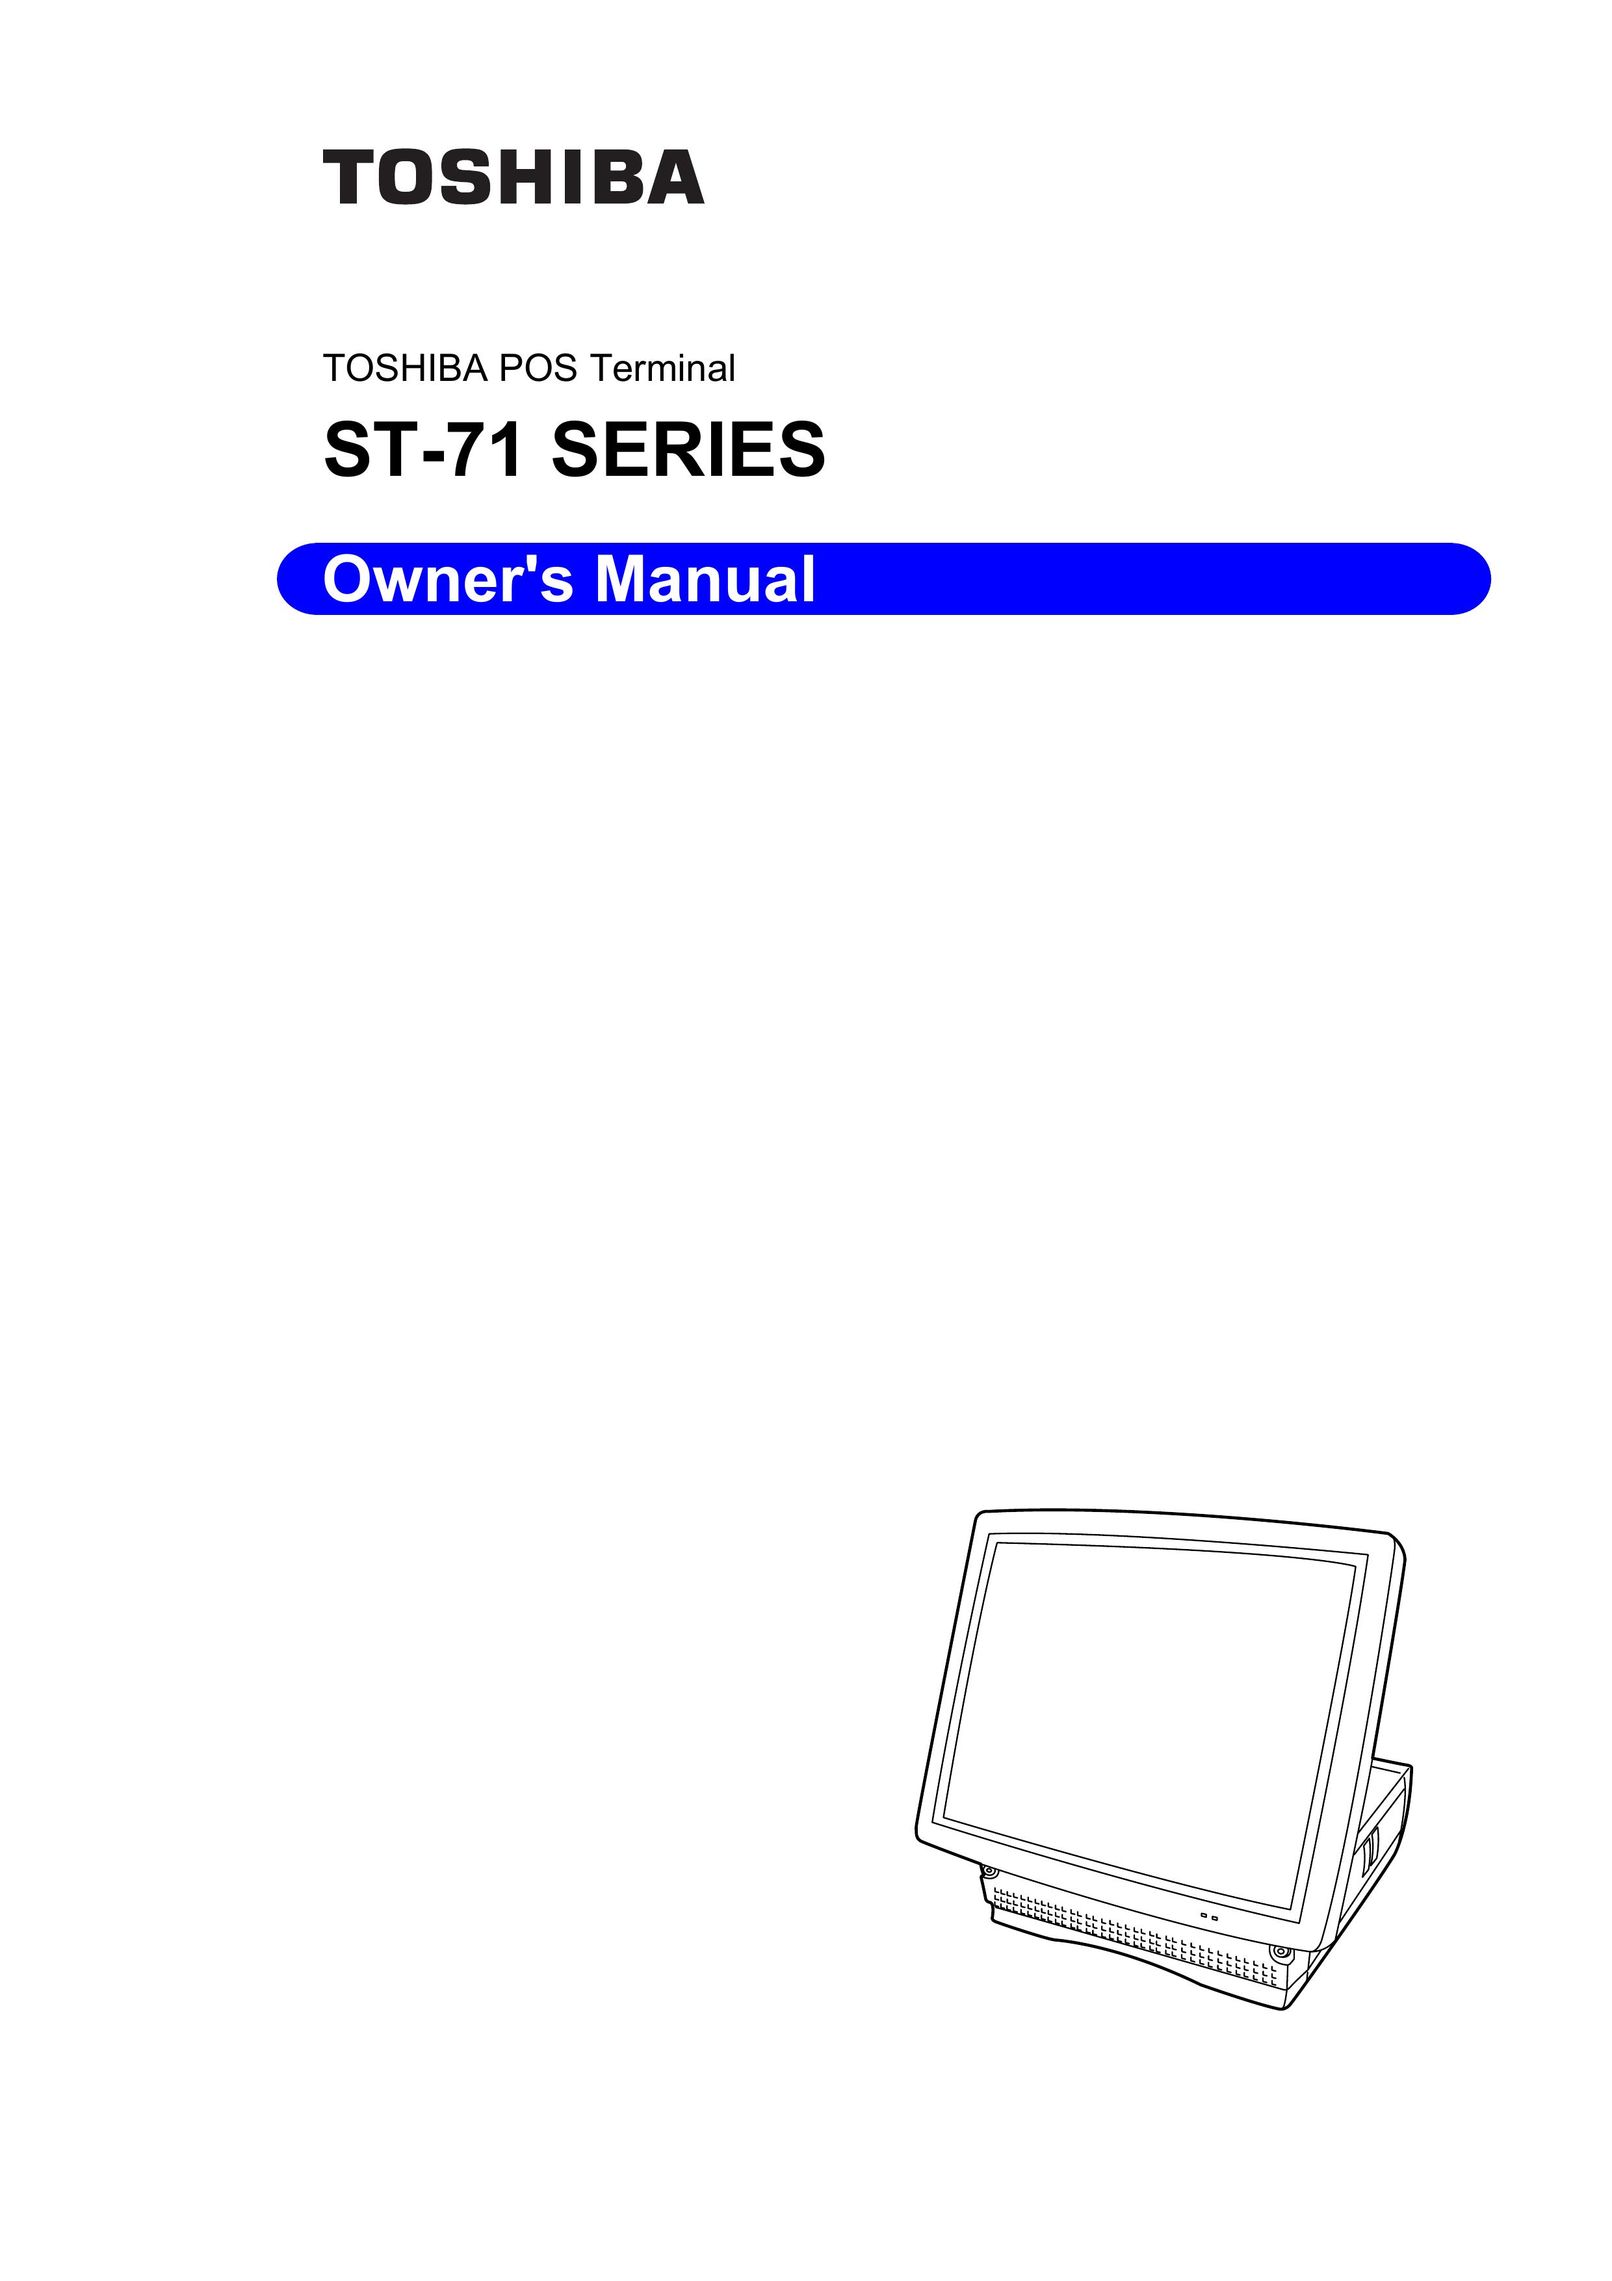 Toshiba ST-71 Credit Card Machine User Manual